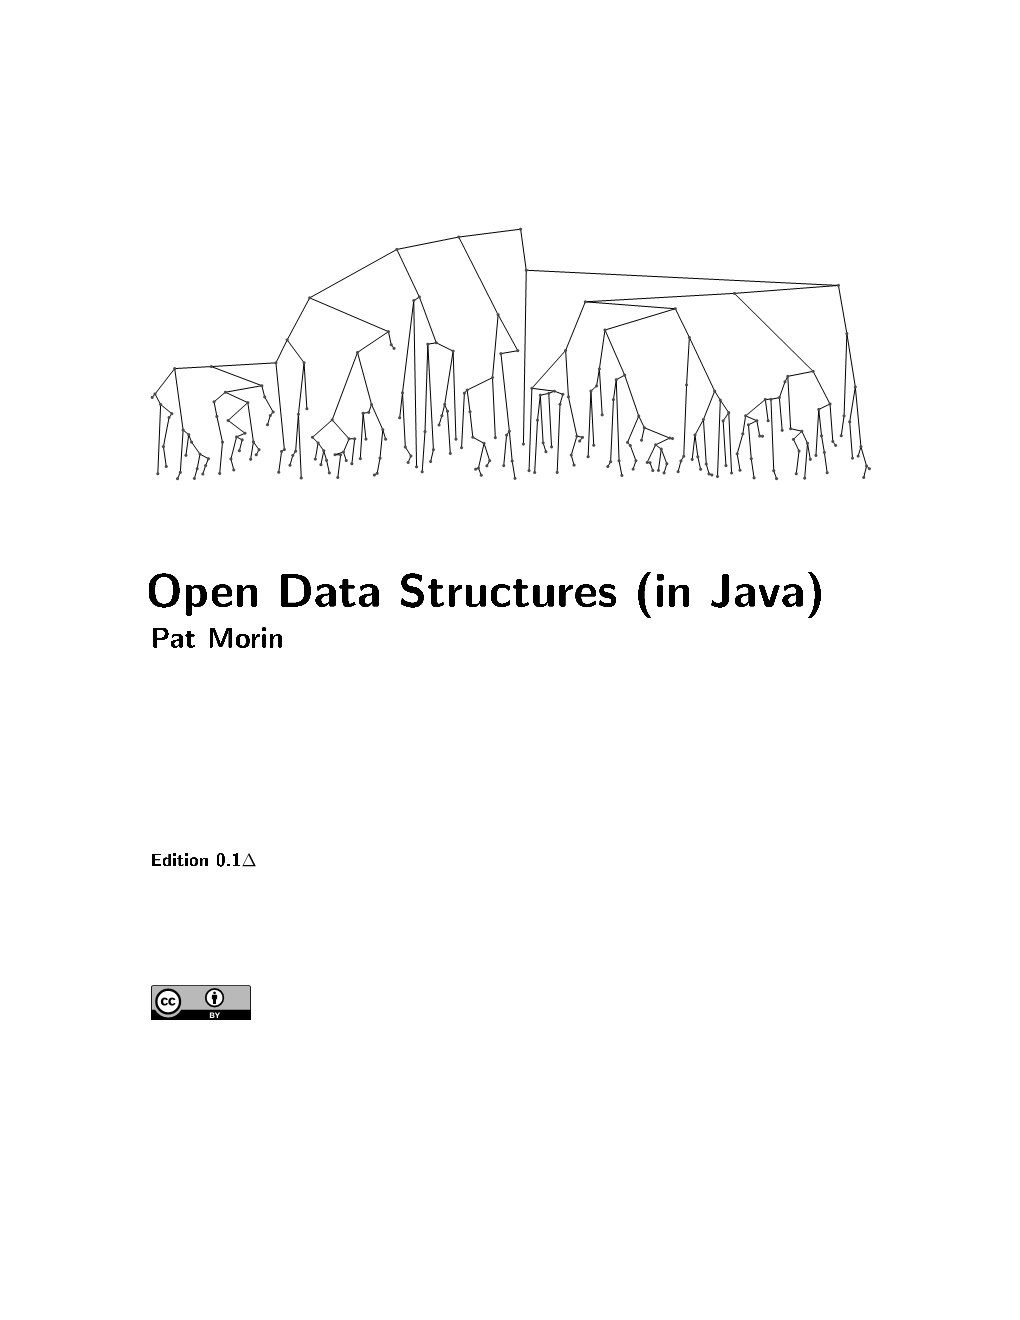 Open Data Structures (In Java) Pat Morin